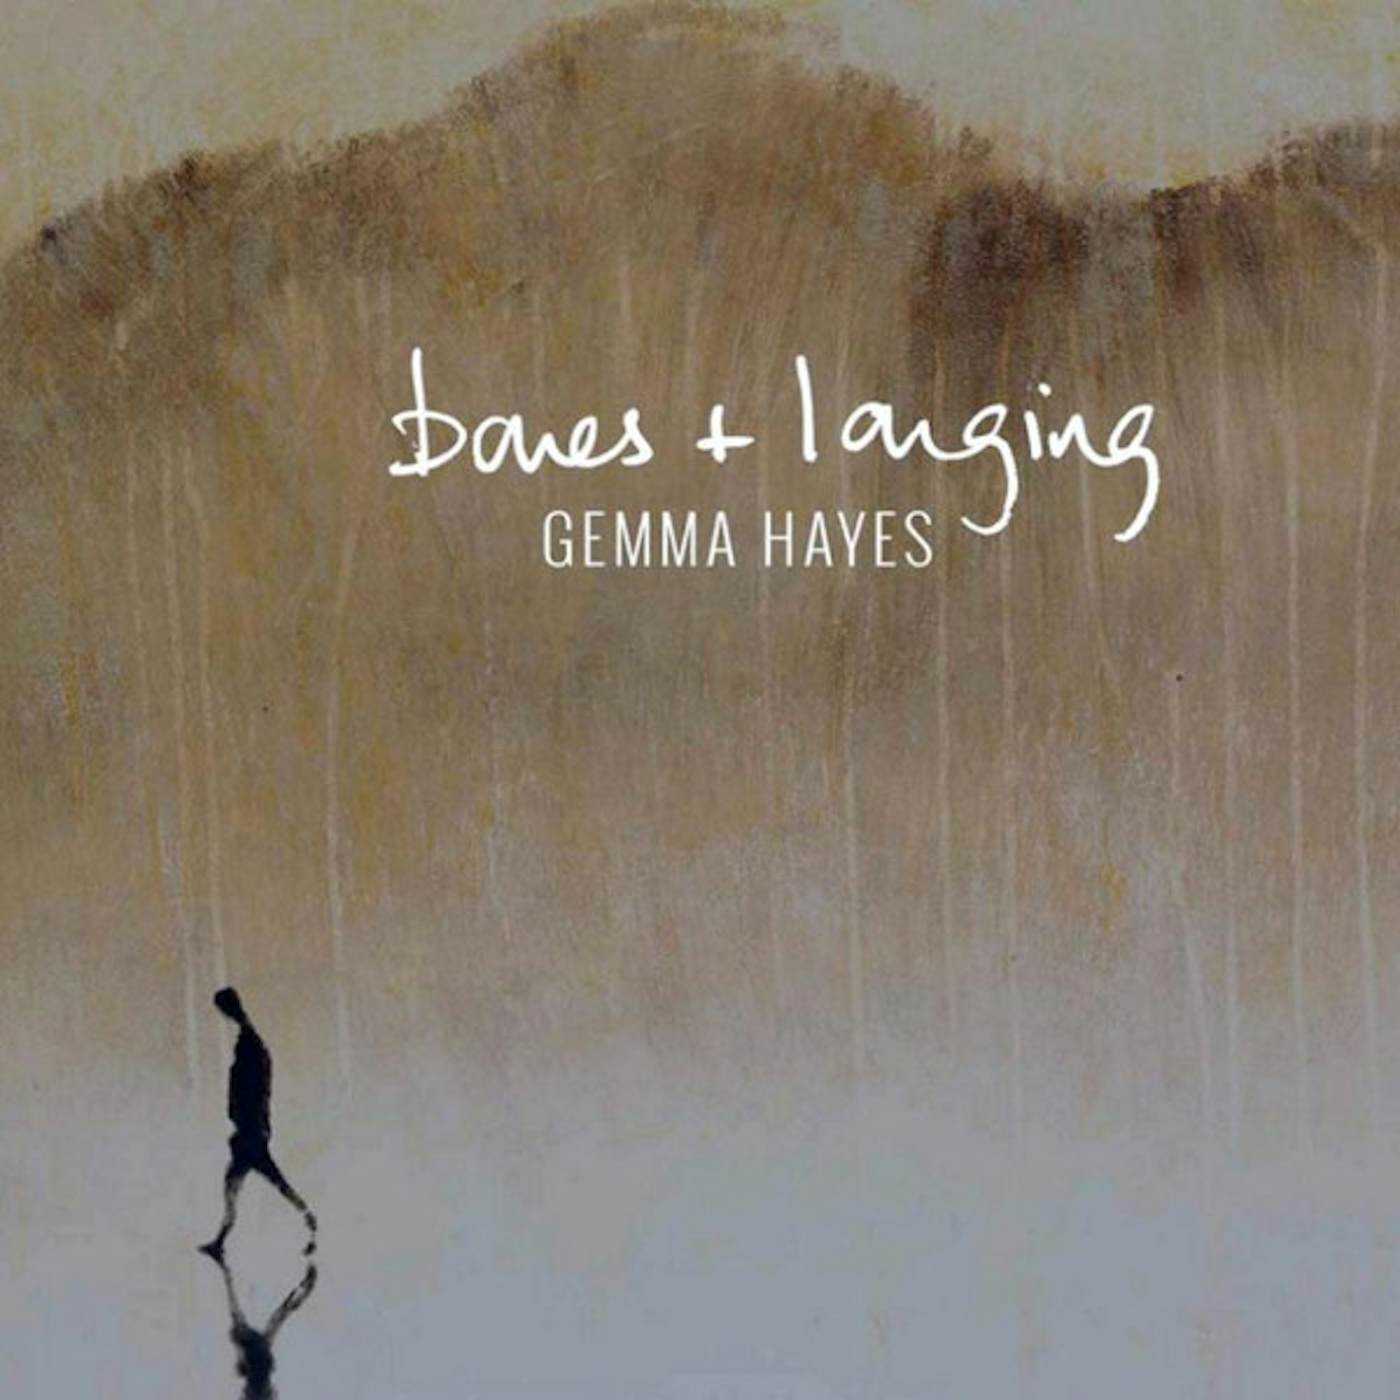 Gemma Hayes BONES + LONGING Vinyl Record - Canada Release